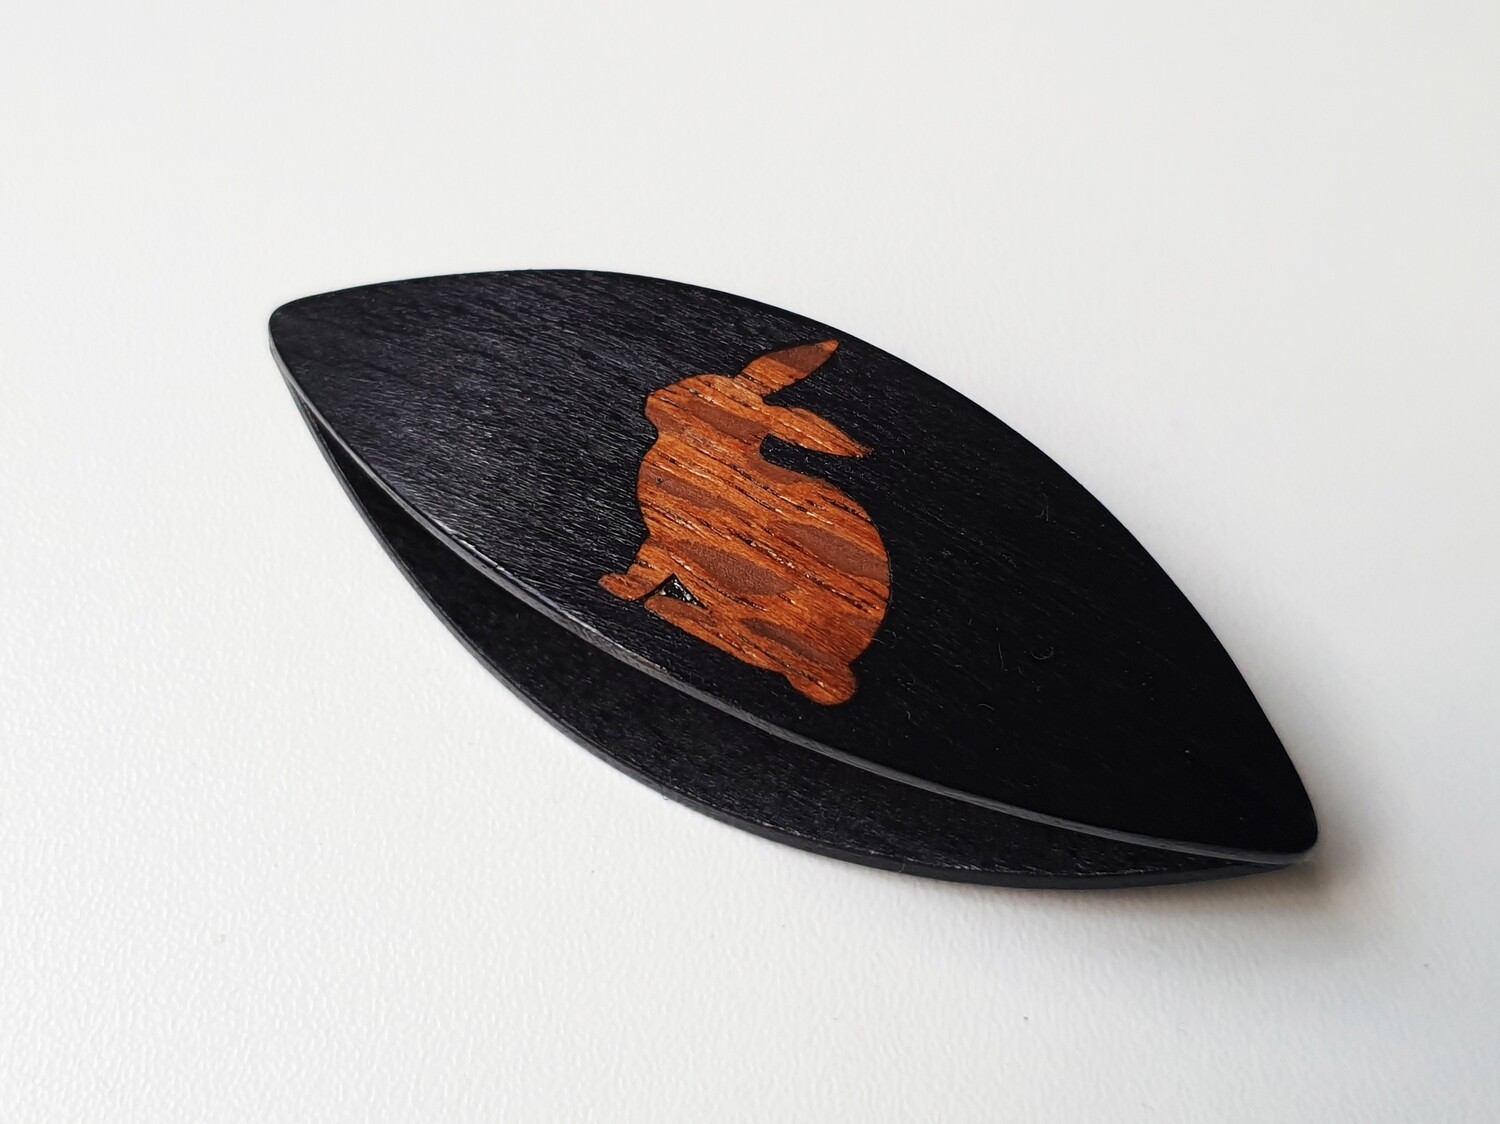 Tatting Shuttle Black Wood With Lacewood Inlay Rabbit